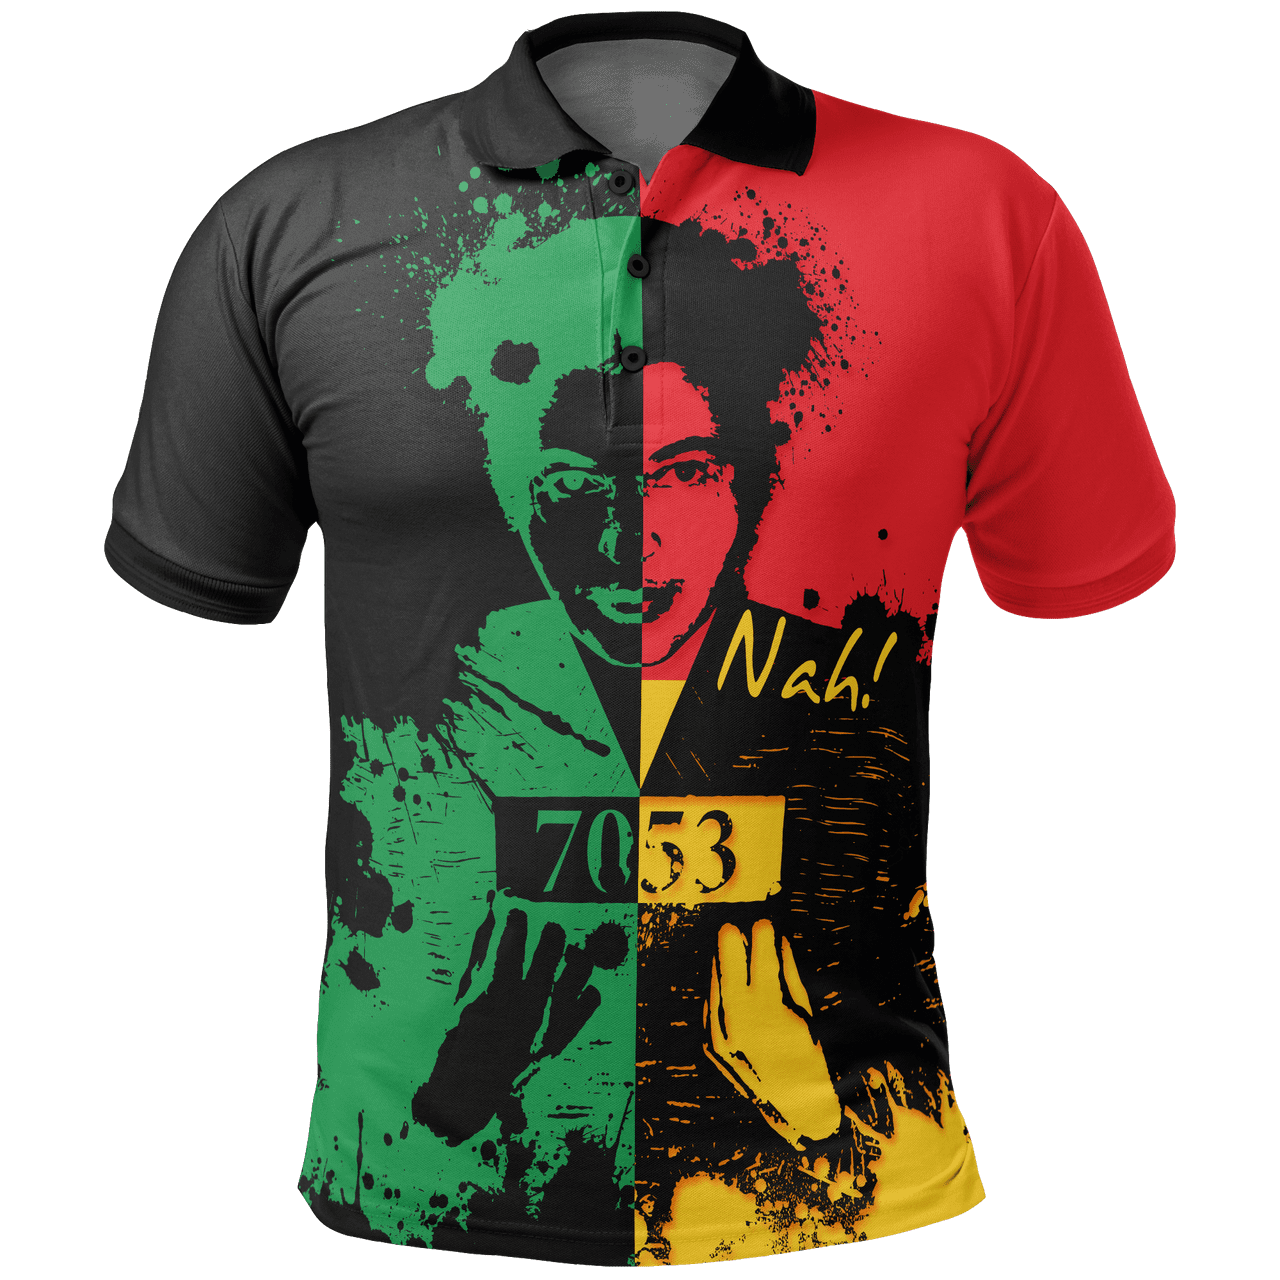 Black History Polo Shirt – Rosa Parks Nah Polo Shirt